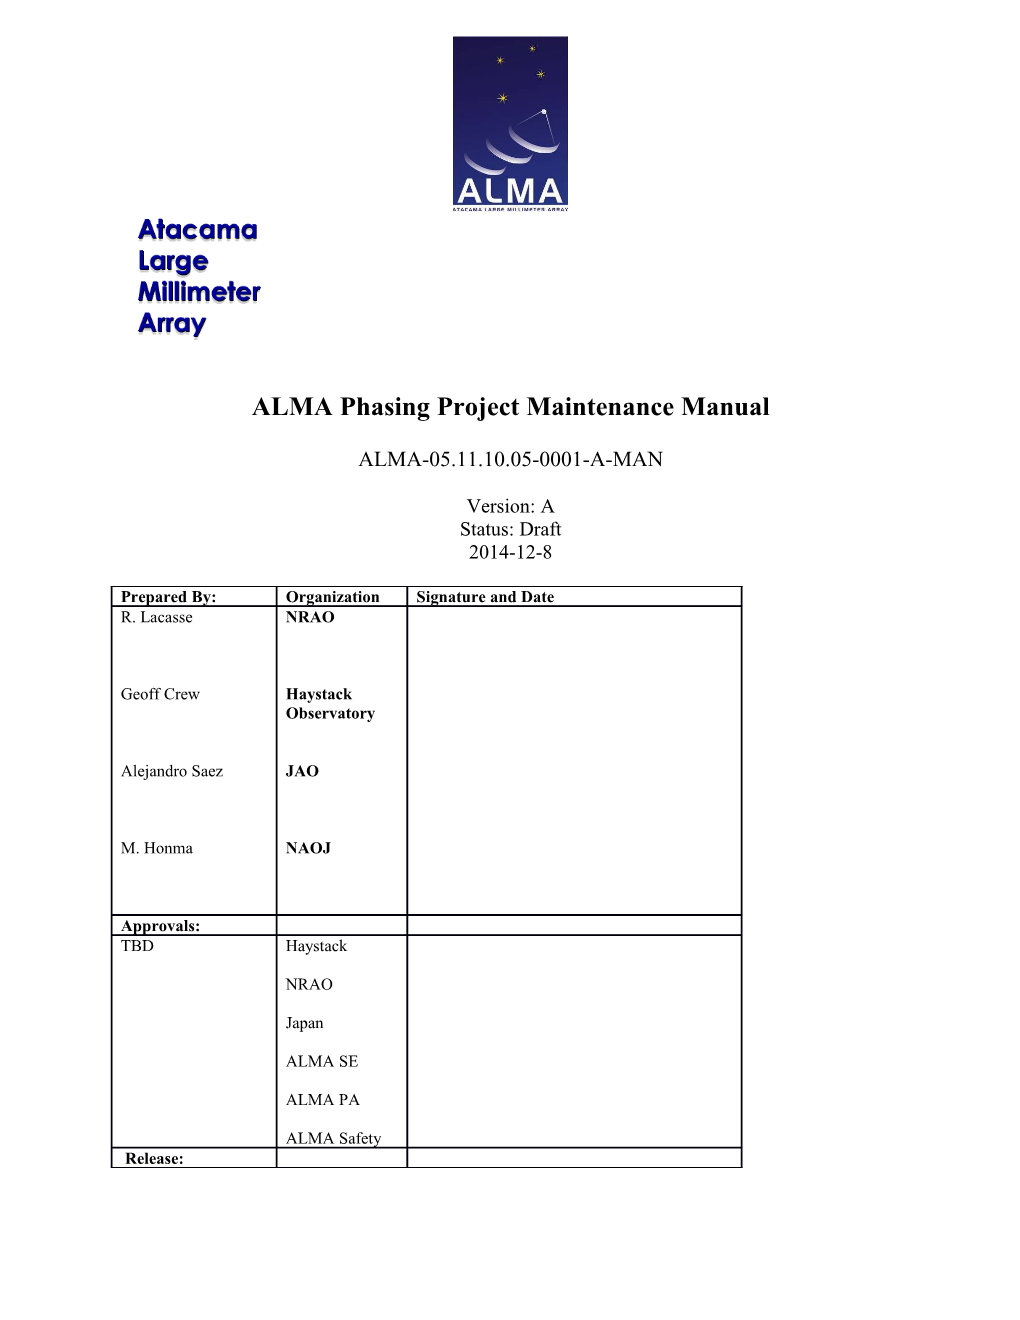 ALMA Phasing Project Maintenance Manual